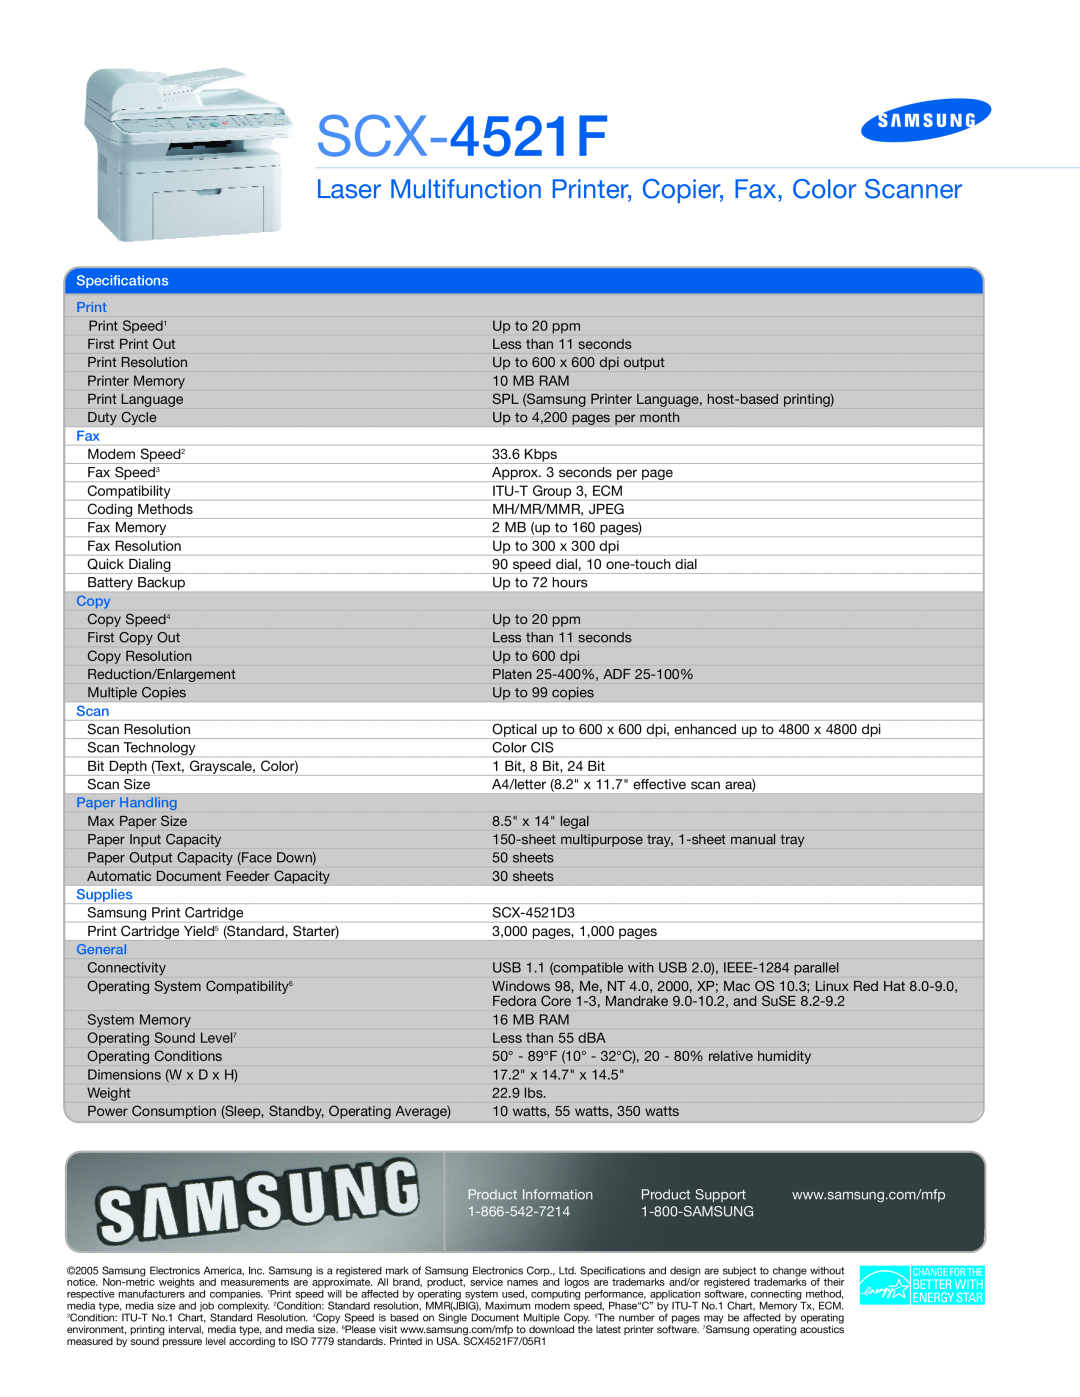 Samsung SCX4521F SCX-4521F, Laser Multifunction Printer, Copier, Fax, Color Scanner, Specifications, Copy, Paper Handling 